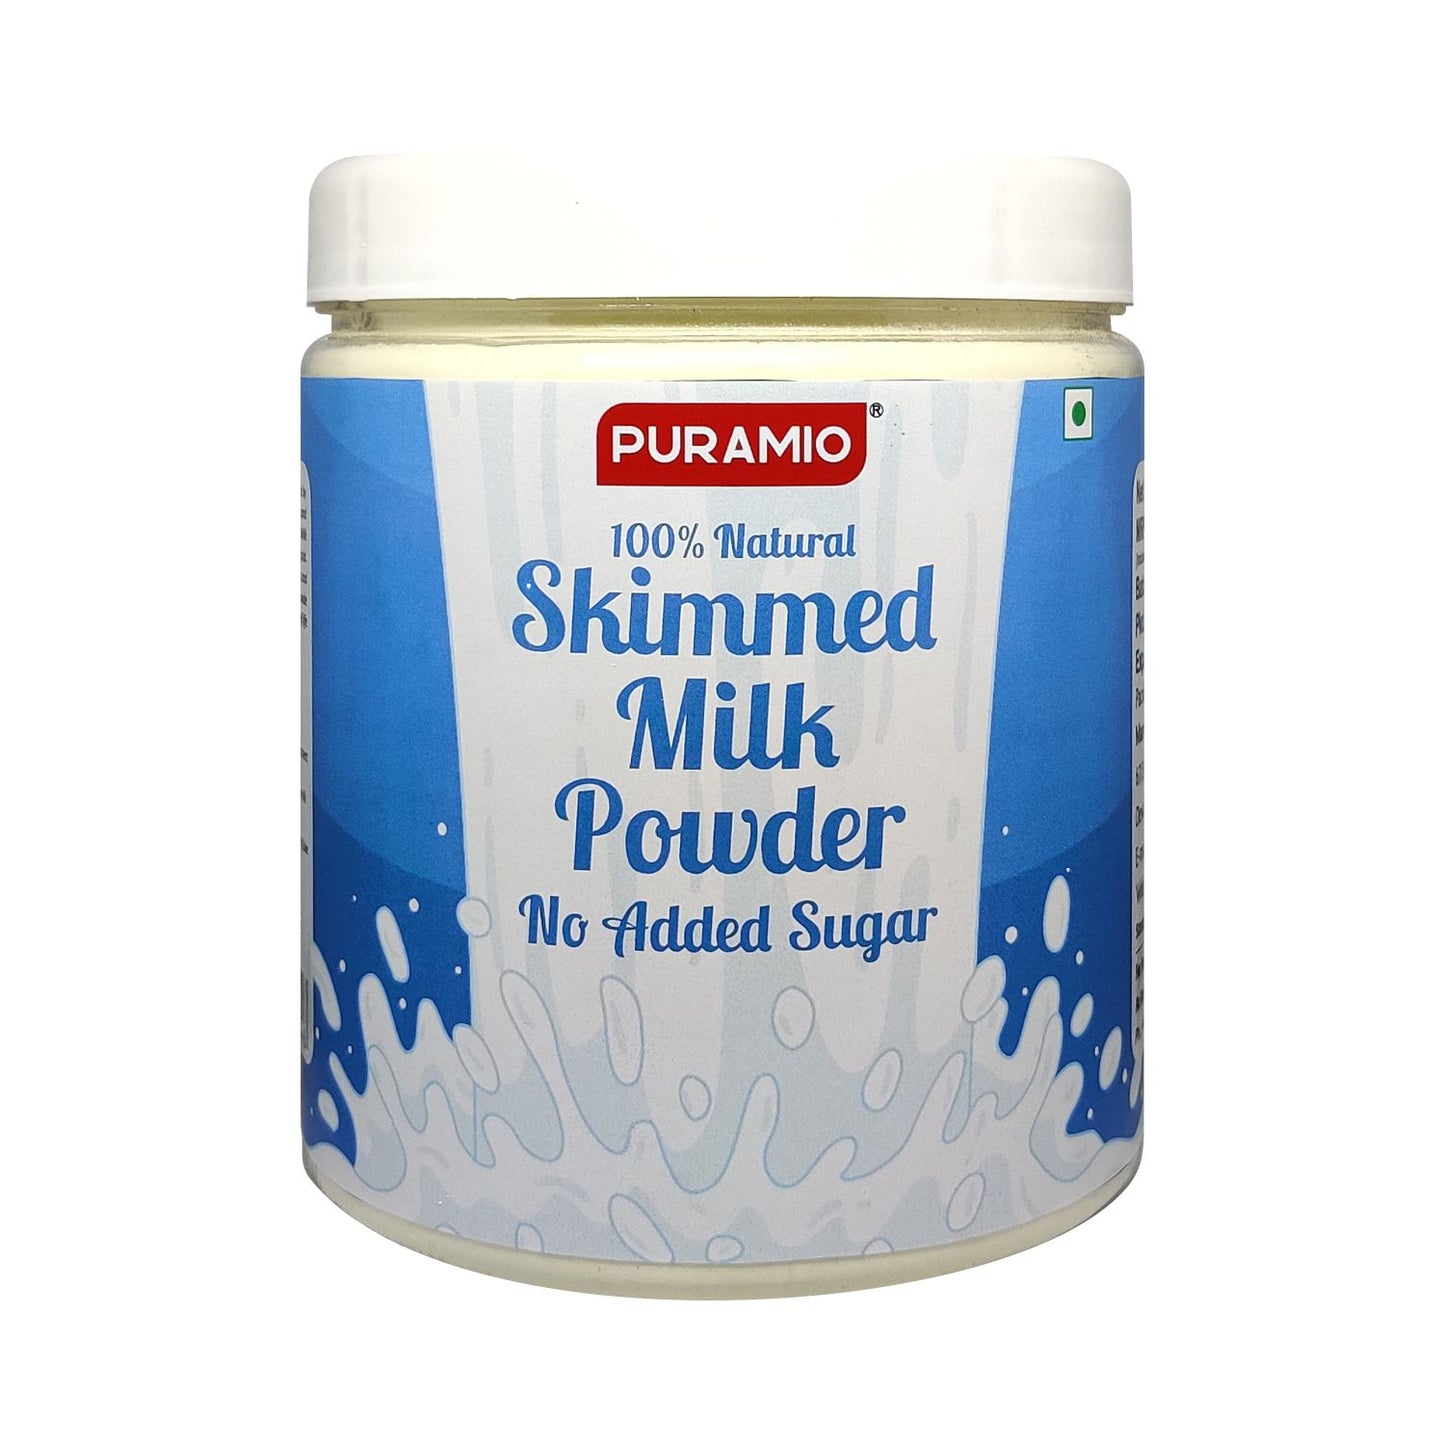 Puramio Skimmed Milk Powder [100% Natural]